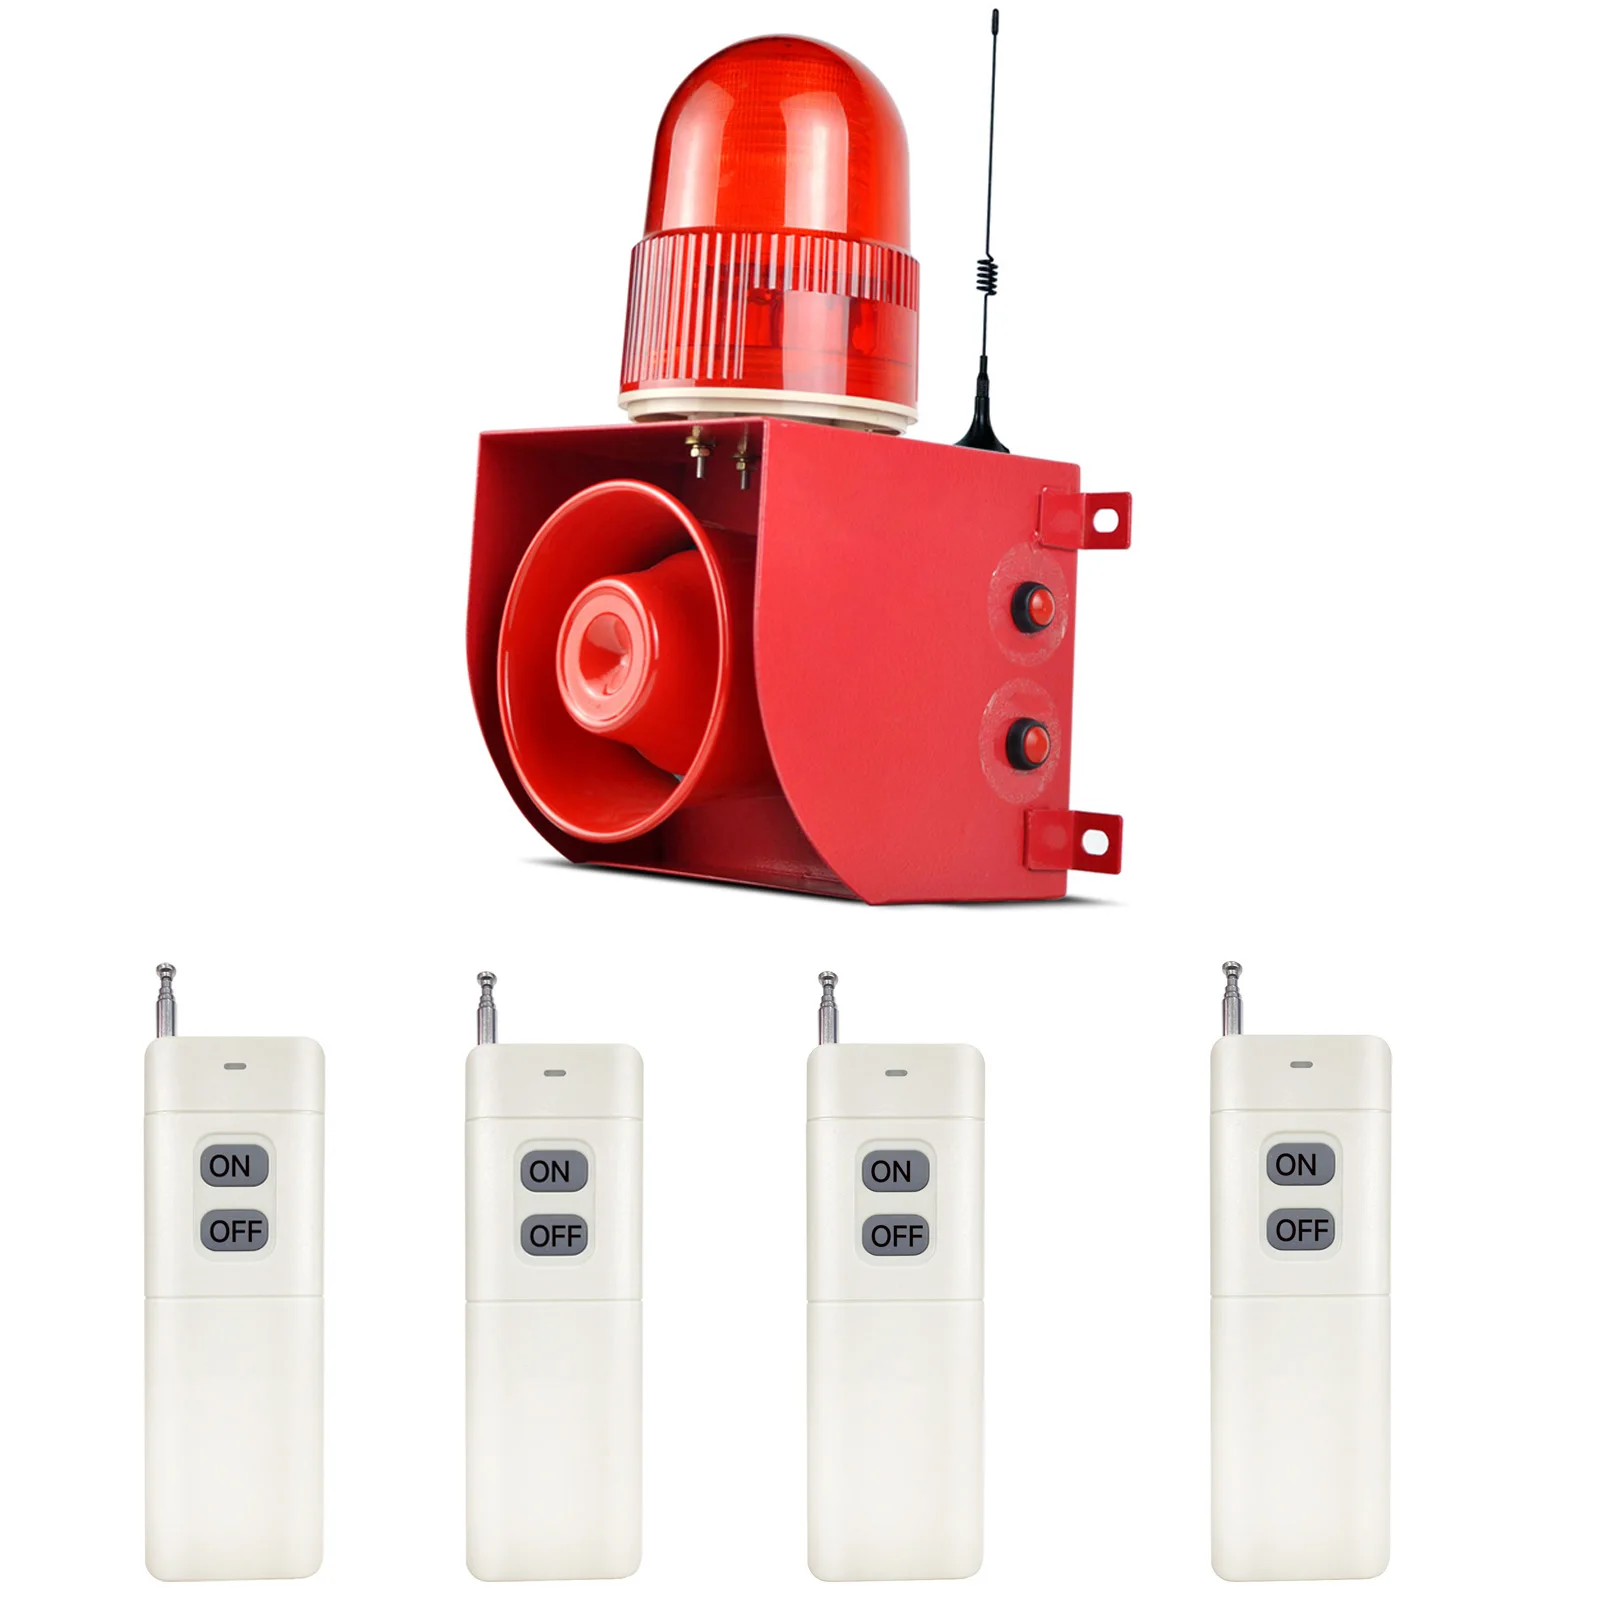 

Outdoor Waterproof 500m Wireless Remote Control Alarm Siren Strobe Light with Adjustable 120dB Horn 9 Tones SLA-01HY-500